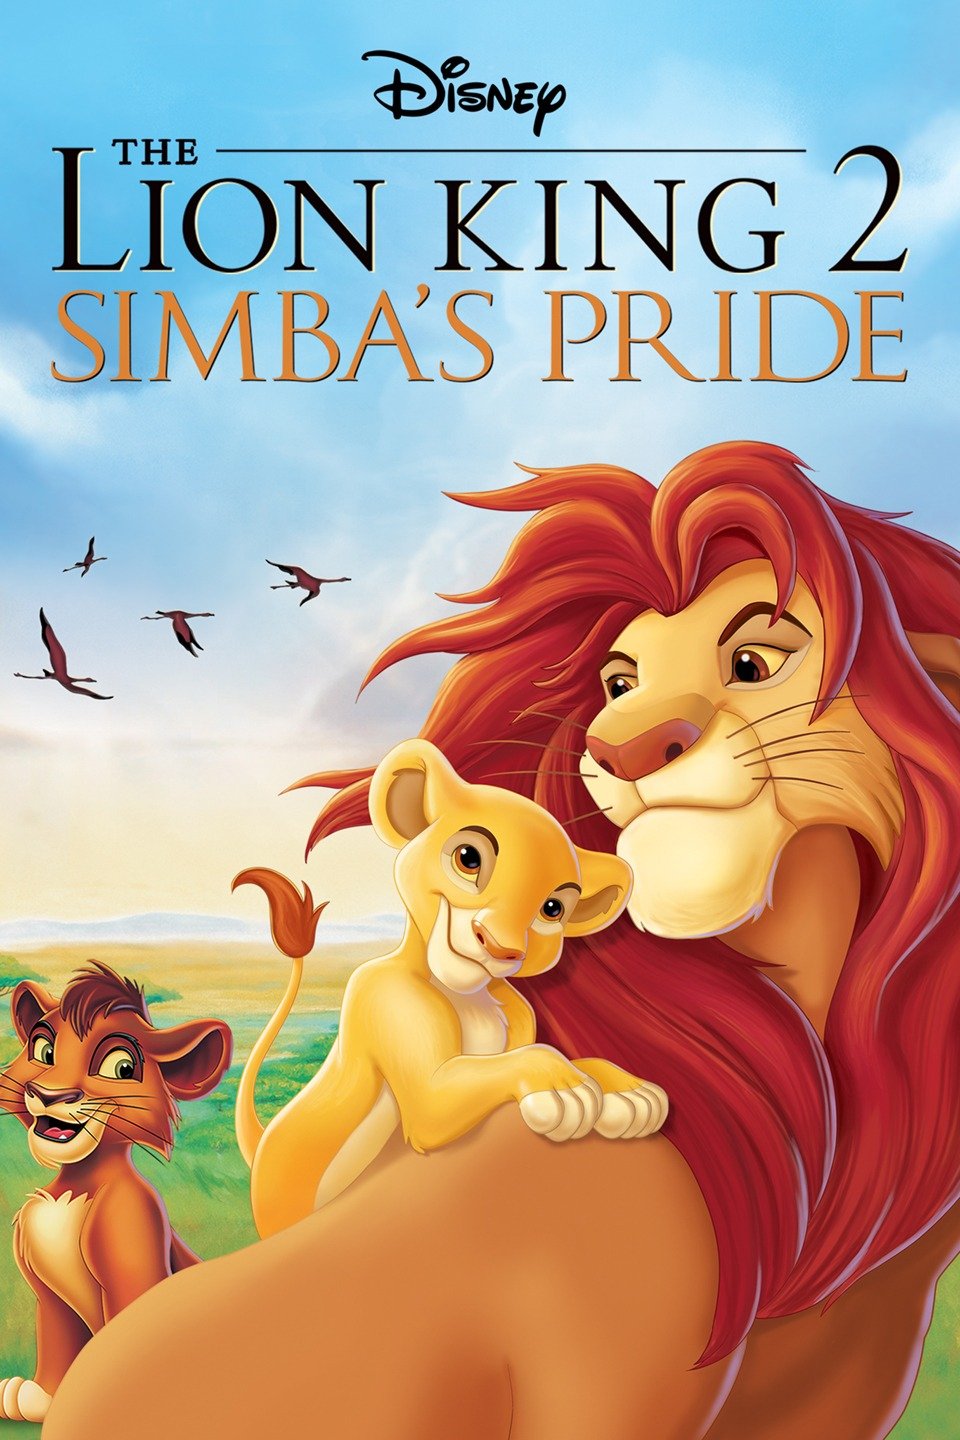 [MINI-HD] The Lion King 2: Simba’s Pride (1998) เดอะไลอ้อนคิง 2: ซิมบ้าเจ้าป่าทรนง [1080p] [พากย์ไทย 5.1 + อังกฤษ DTS] [บรรยายไทย + อังกฤษ] [เสียงไทย + ซับไทย]